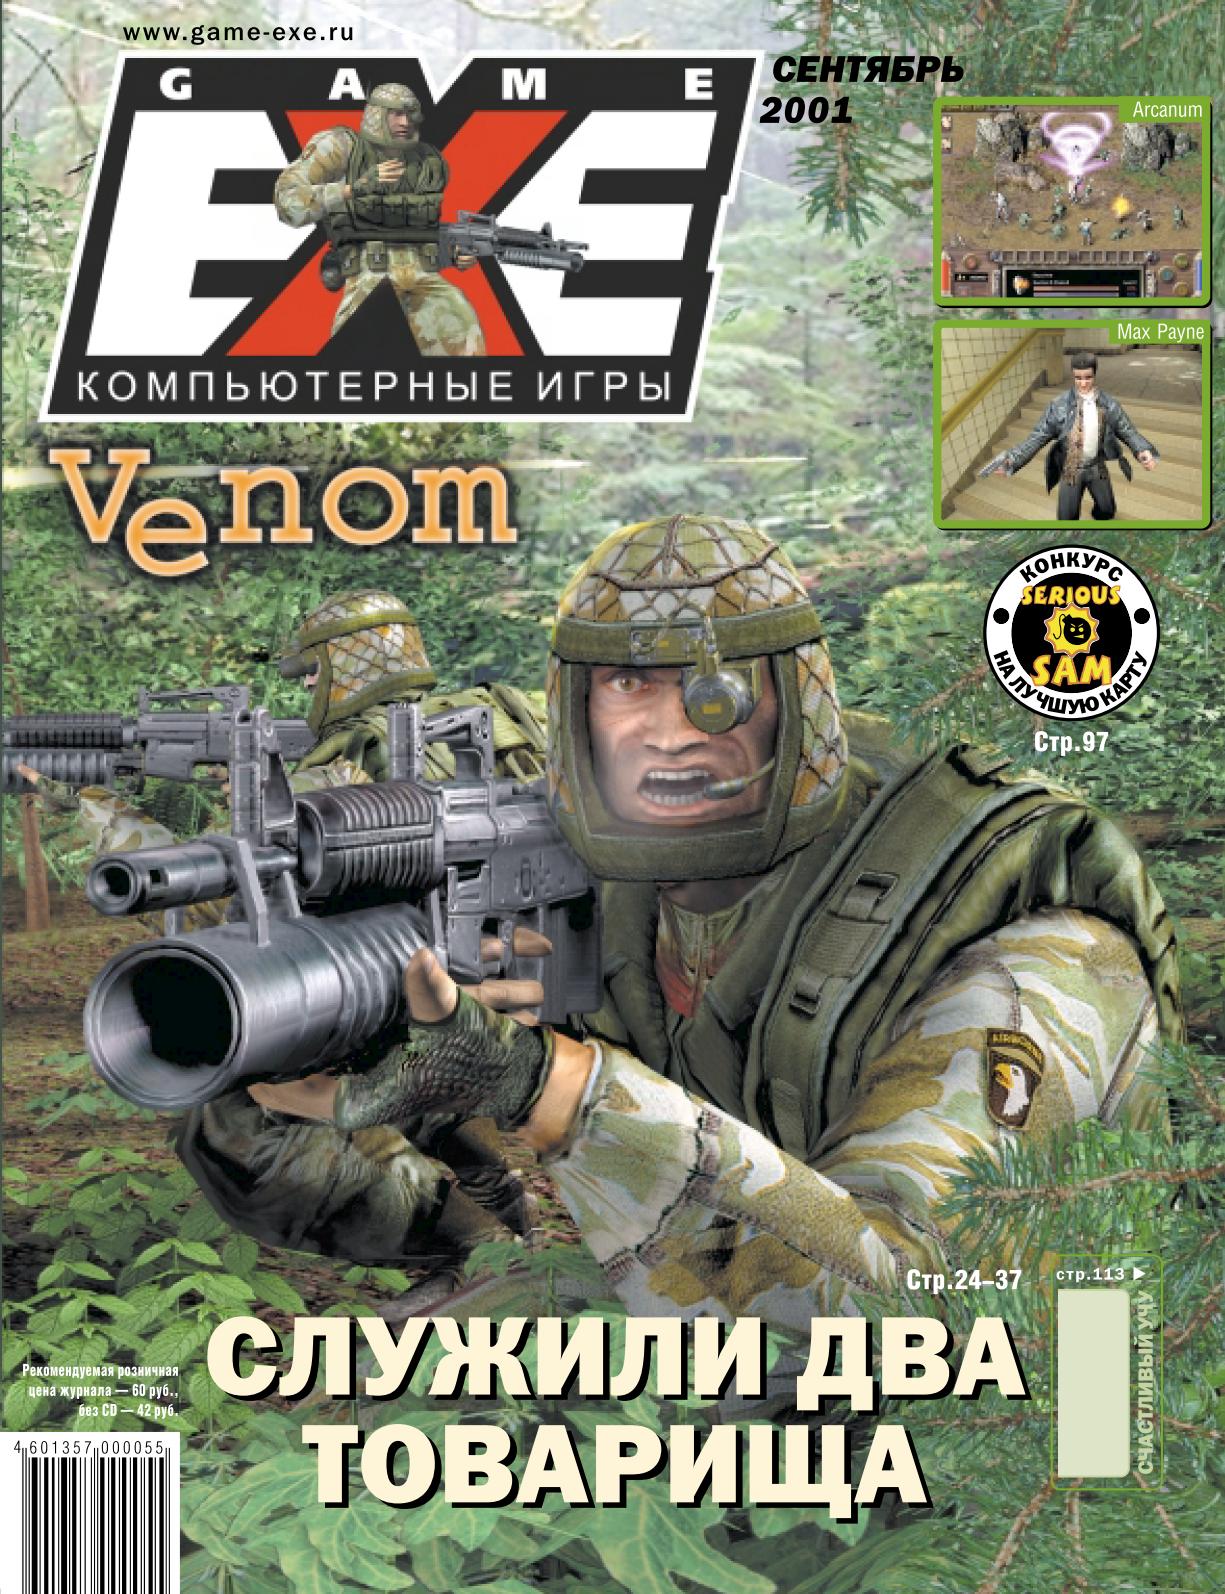 Download game exe. Game exe журнал. Компьютерные игры 2001. Журнал гейм ехе. Game exe 2001.